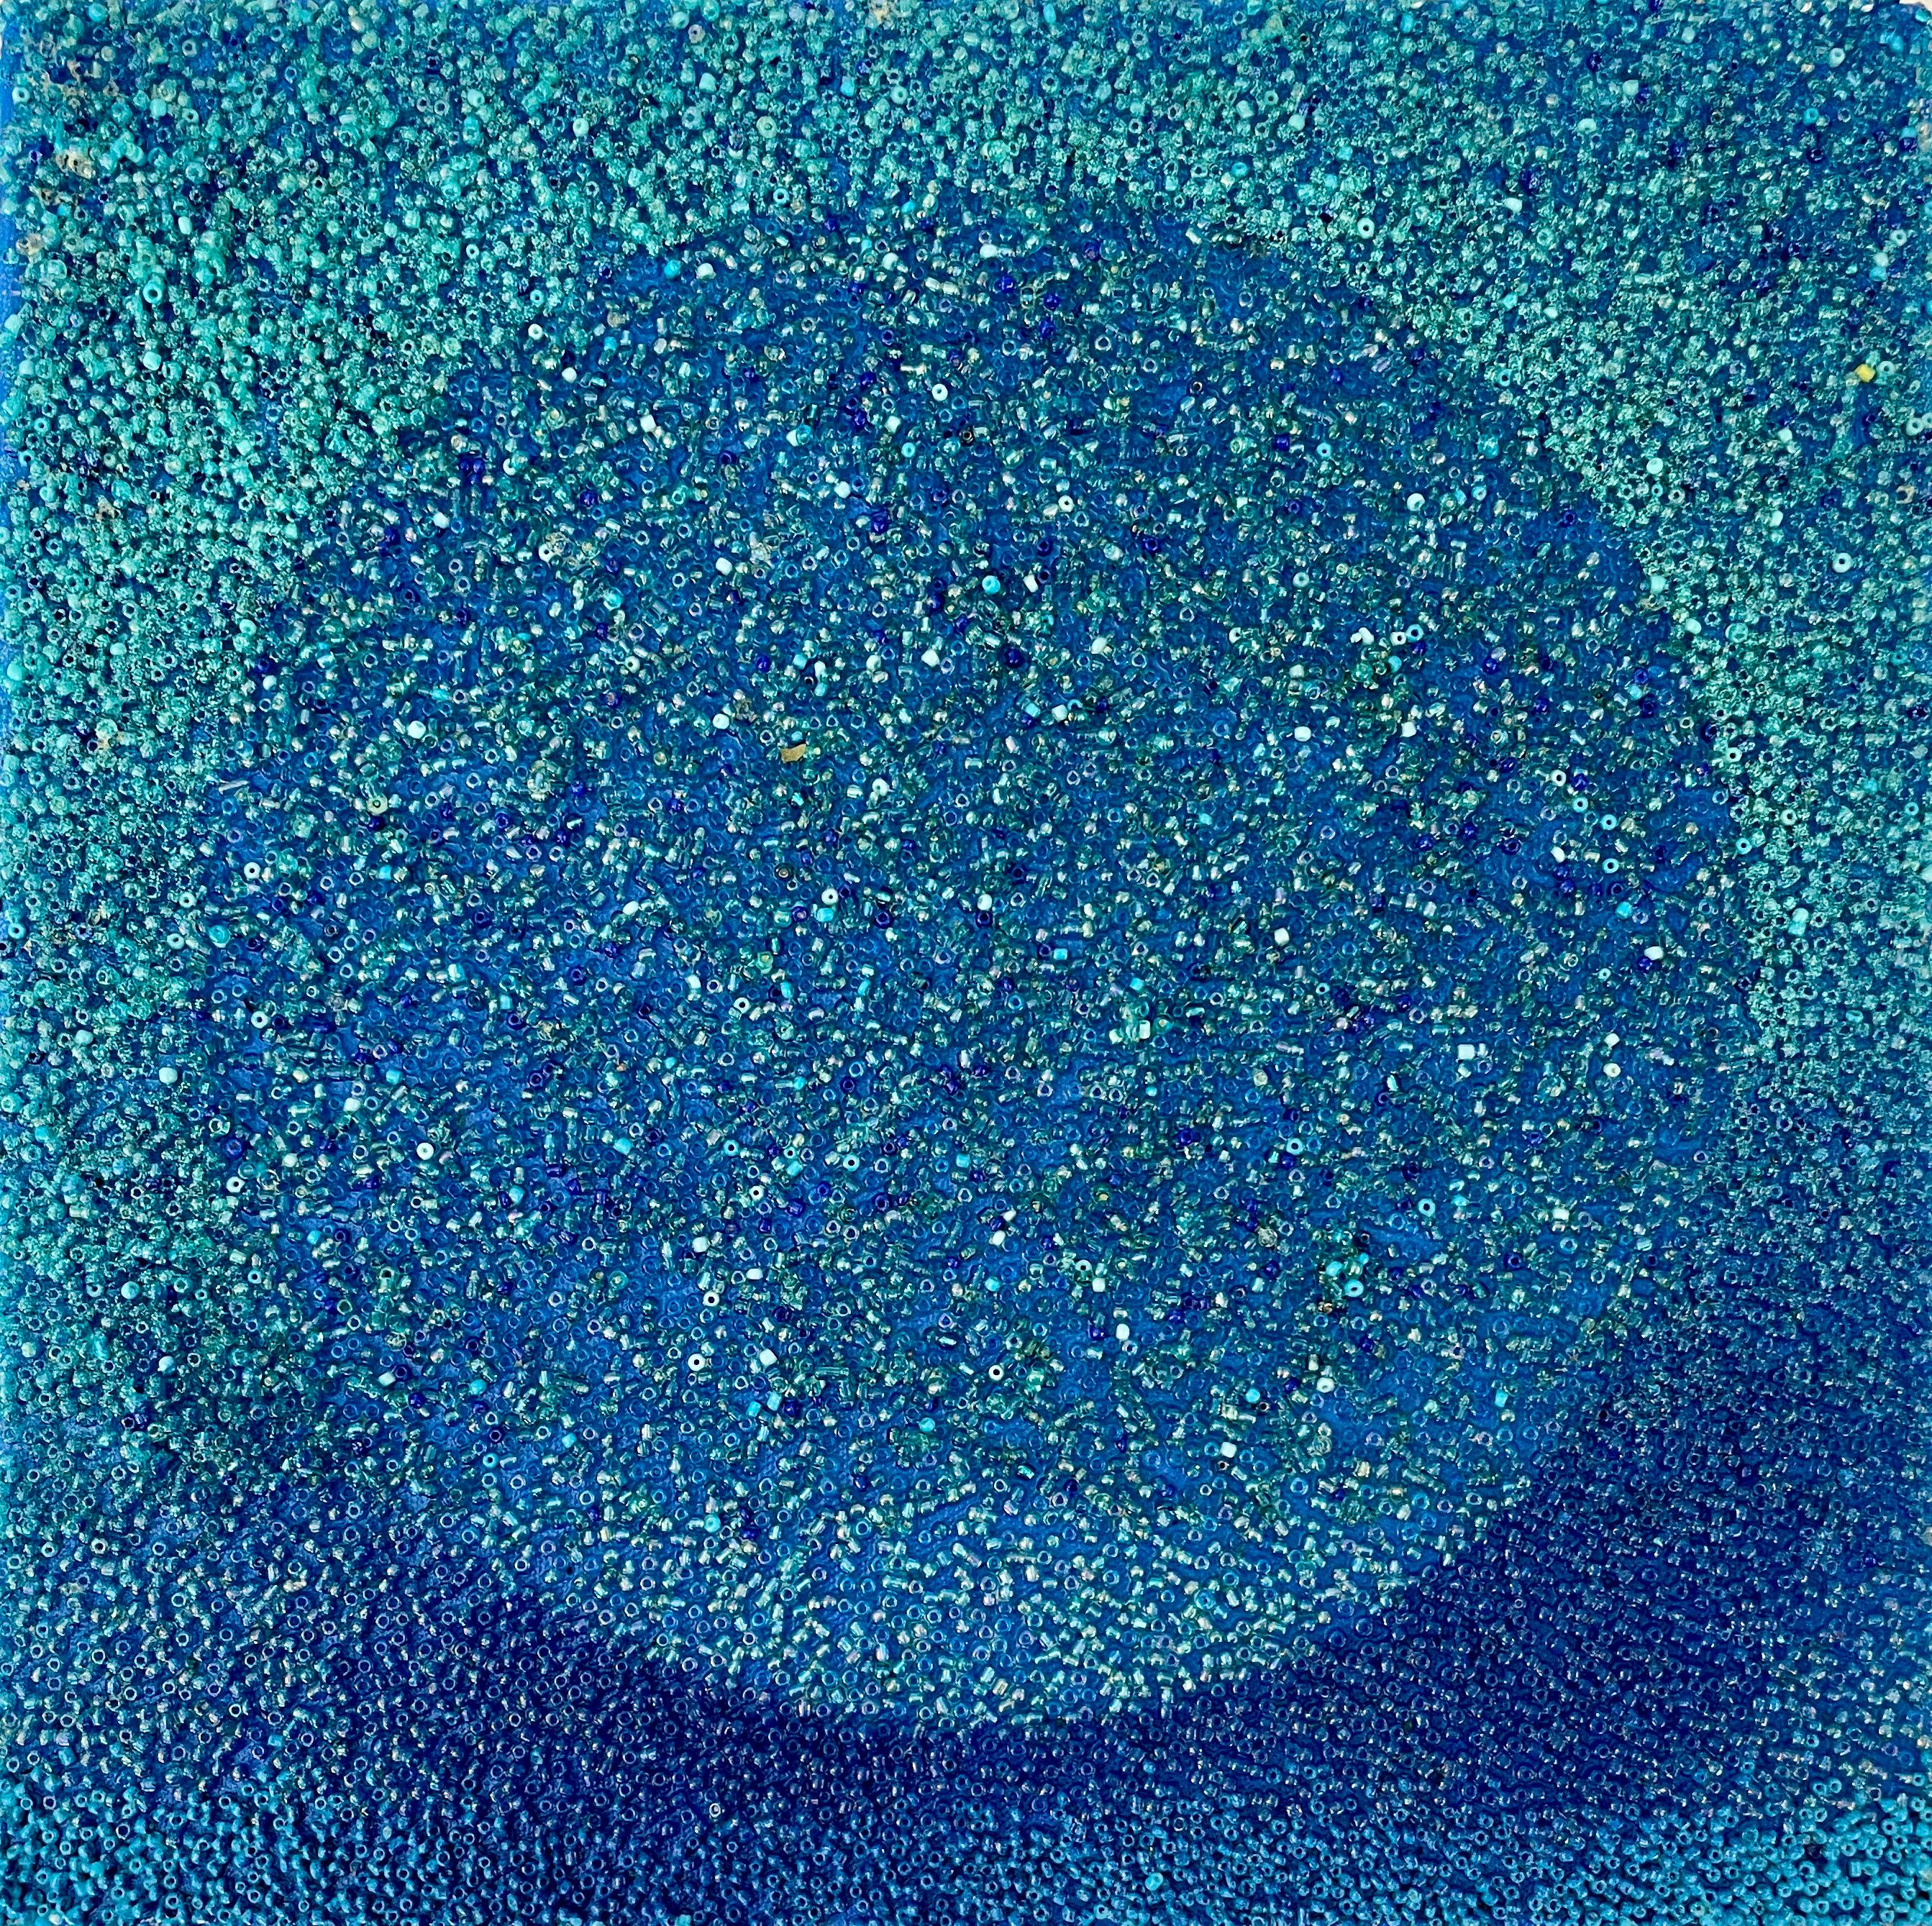 Tantra in Blue n° 11 : sculpture/peinture abstraite minimaliste avec cercles madala